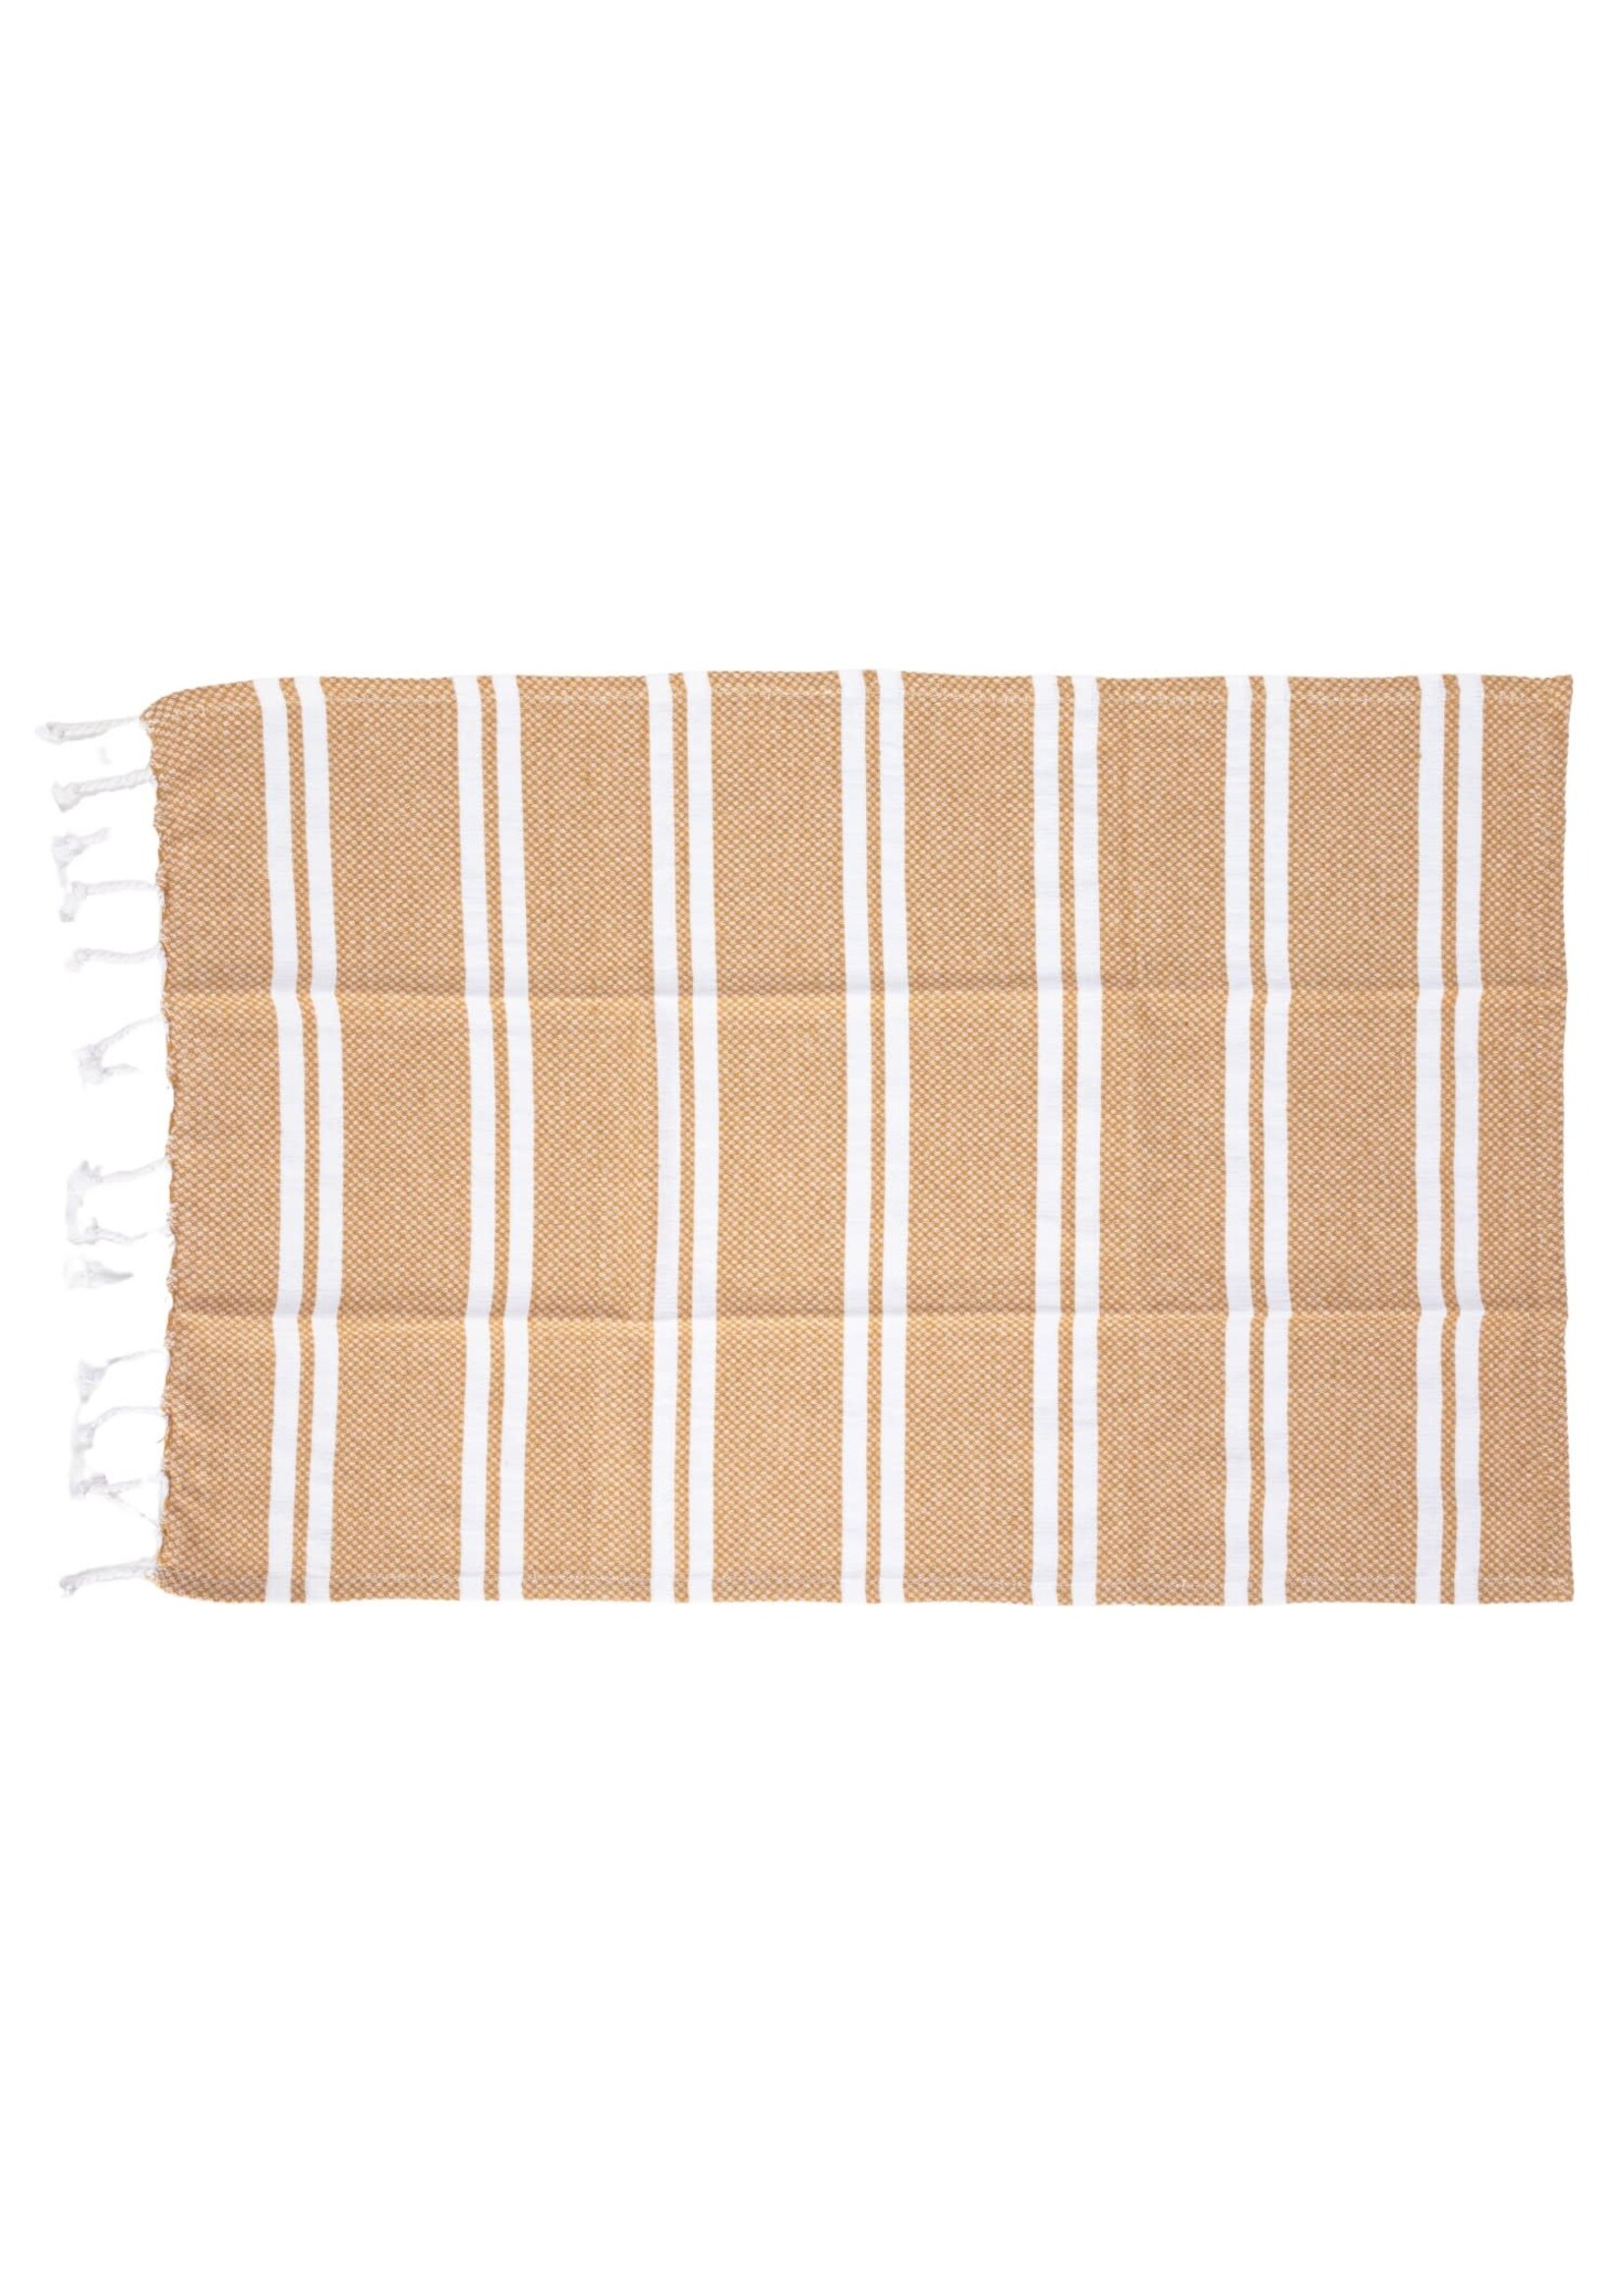 Woven Cotton Yarn Dyed Kitchen Towel w/ Stripes & Tassels, Set of 3